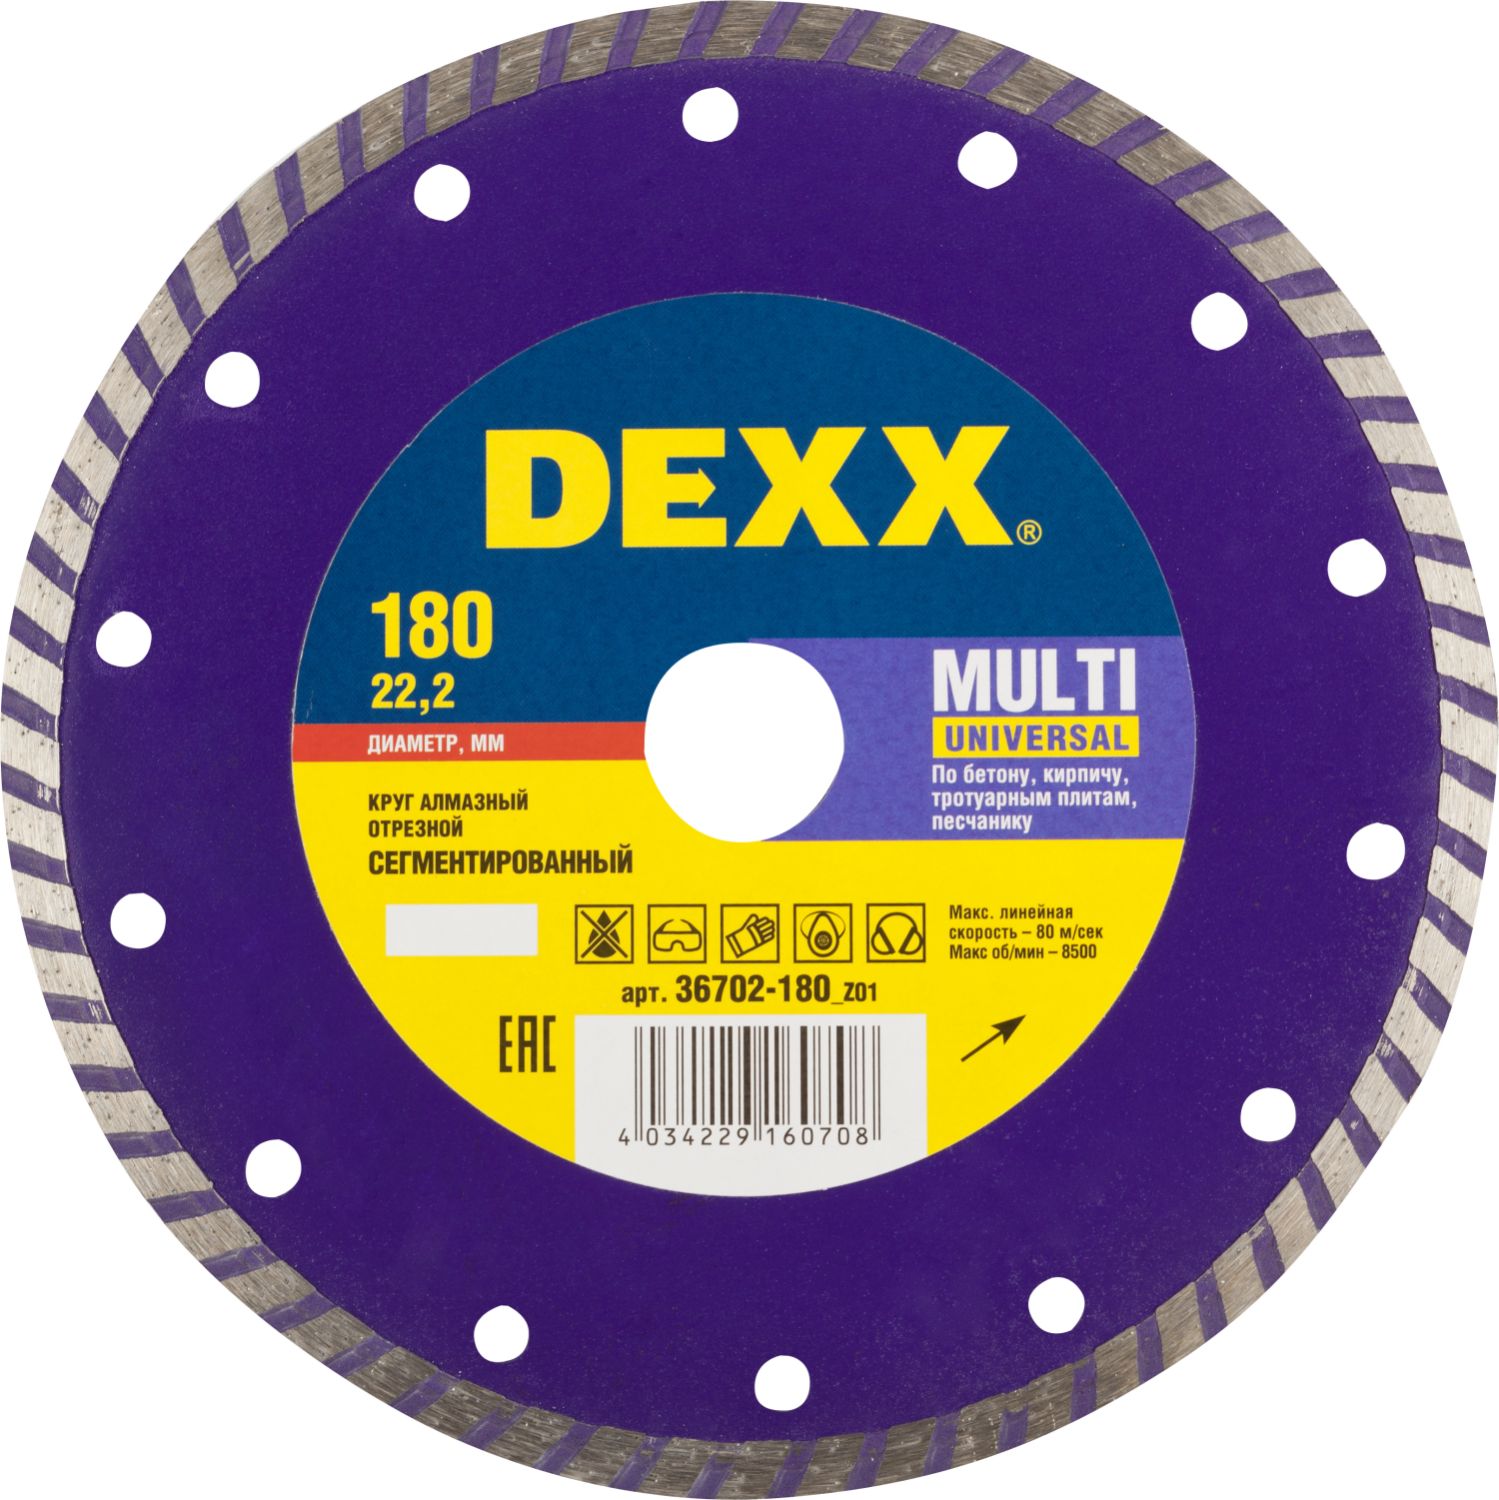 DEXX Multi Universal, 180 мм, (22.2 мм, 7 х 2.3 мм), сегментированный алмазный диск (36702-180)